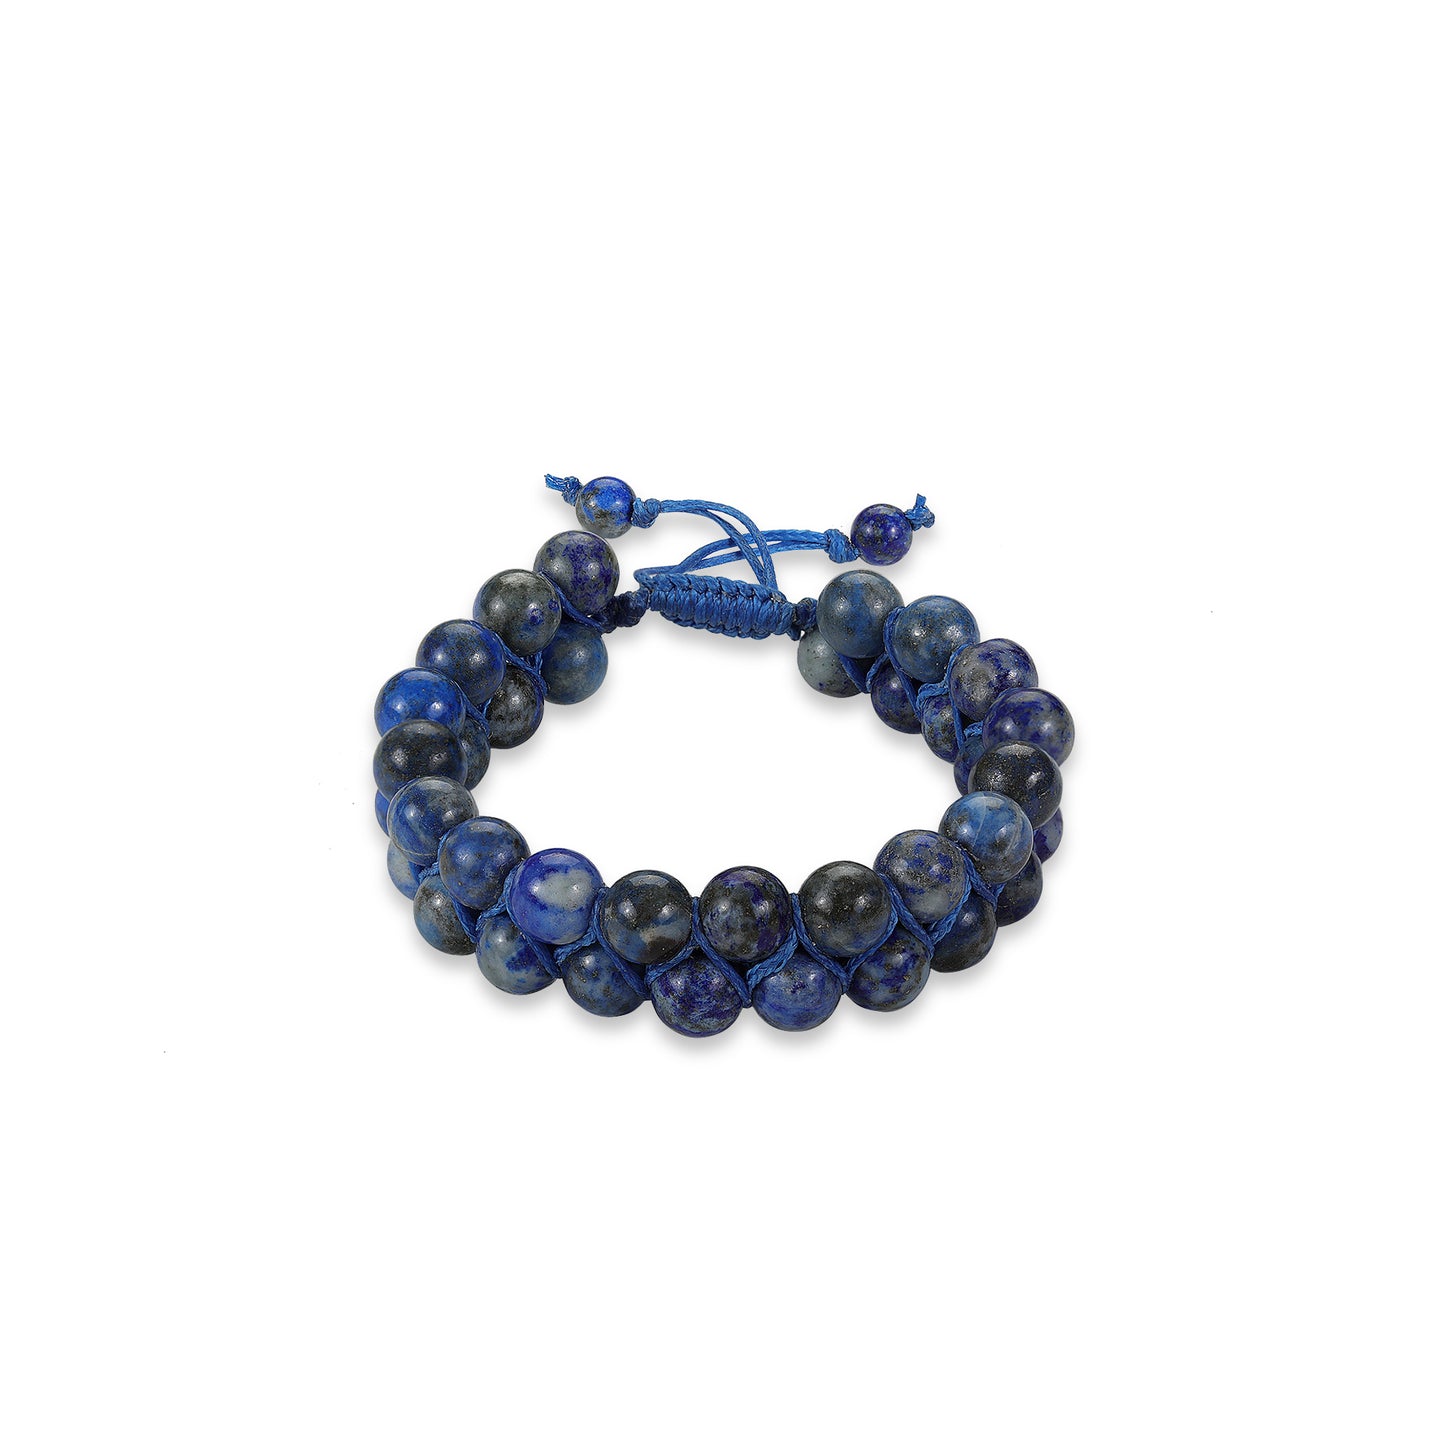 Lapis Lazuli 2 layered Bracelet - Stone of Knowledge and Wisdom